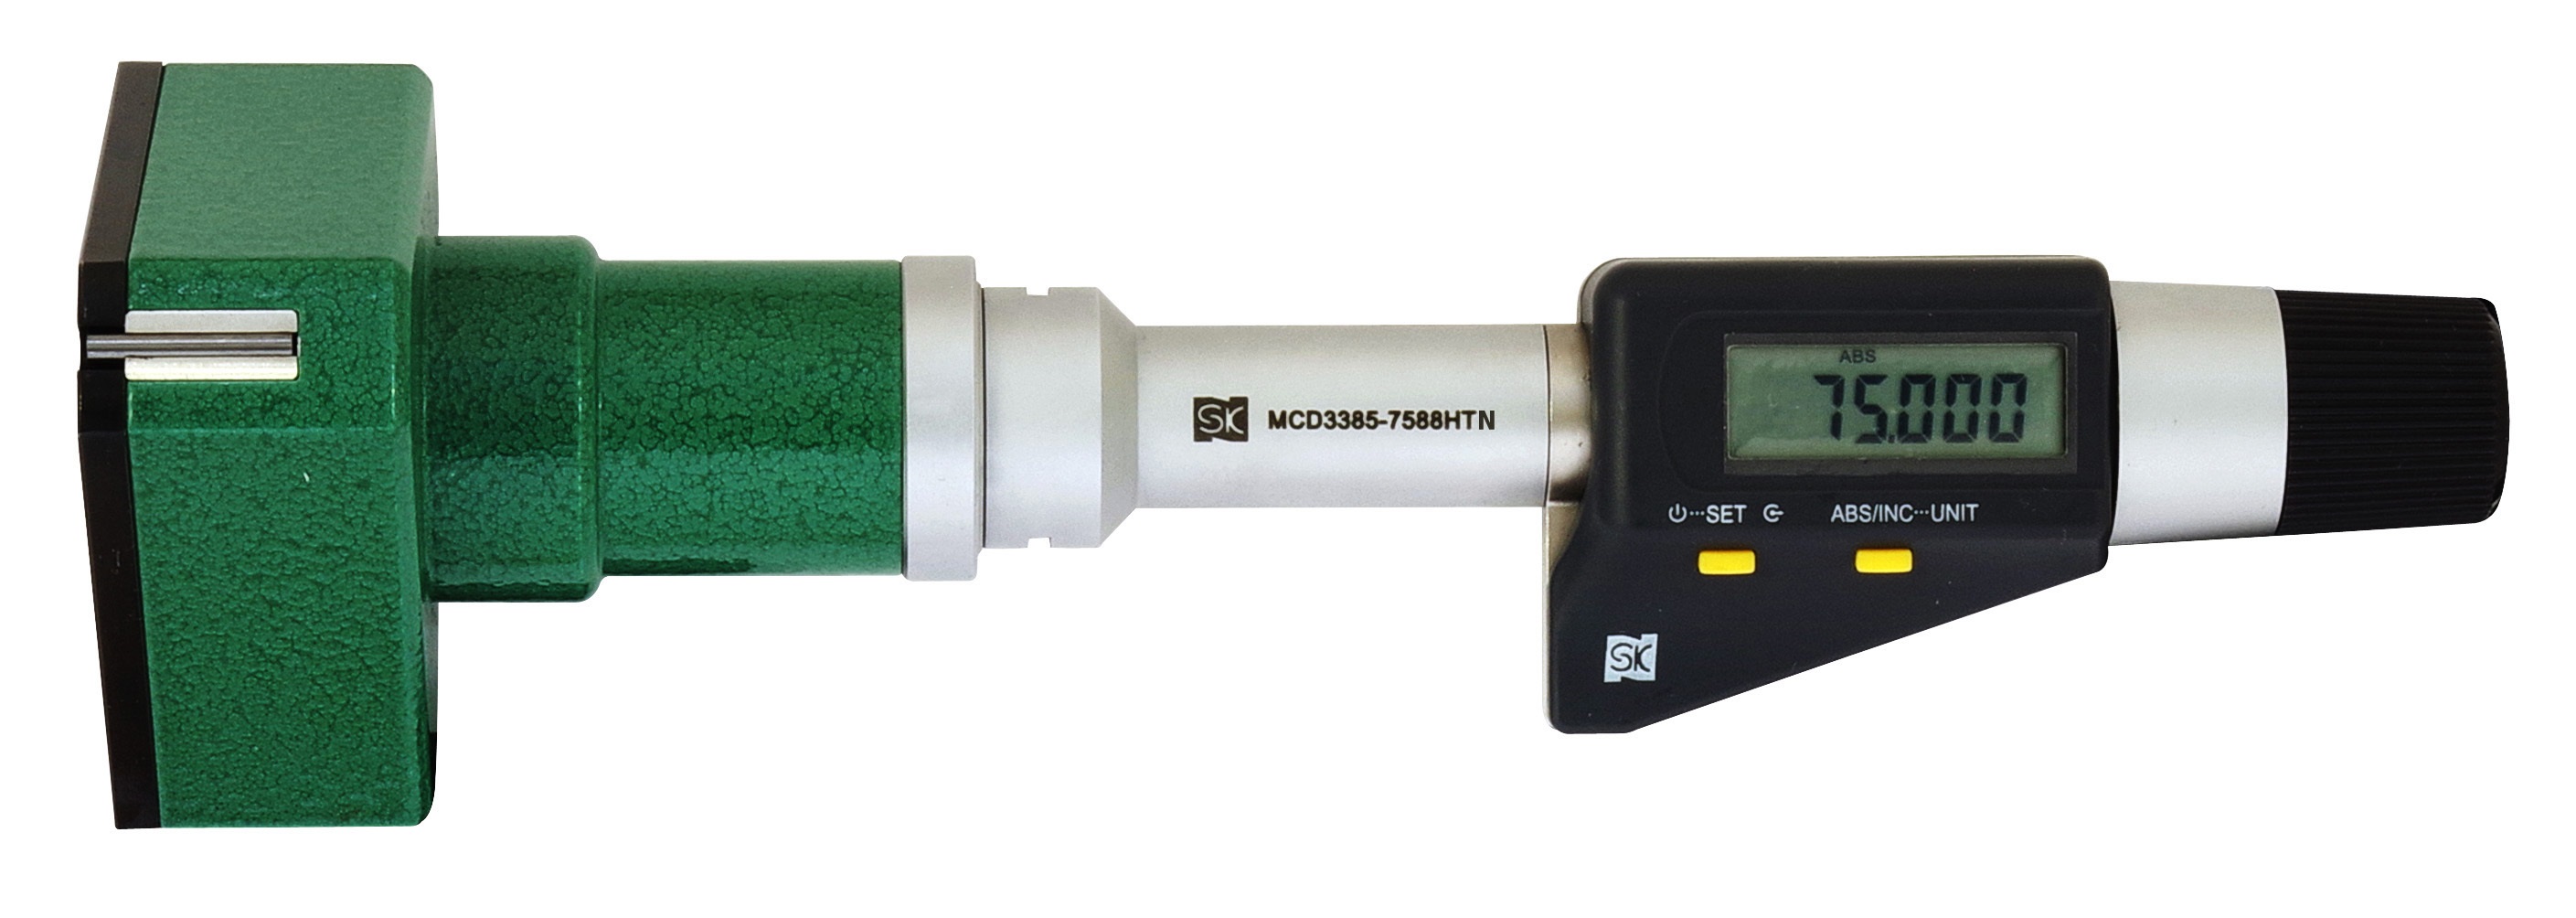 SK デジタル三点マイクロメータ MCD33850608HT 測定工具 測定範囲:6-8mm その他 計測機器 作業工具